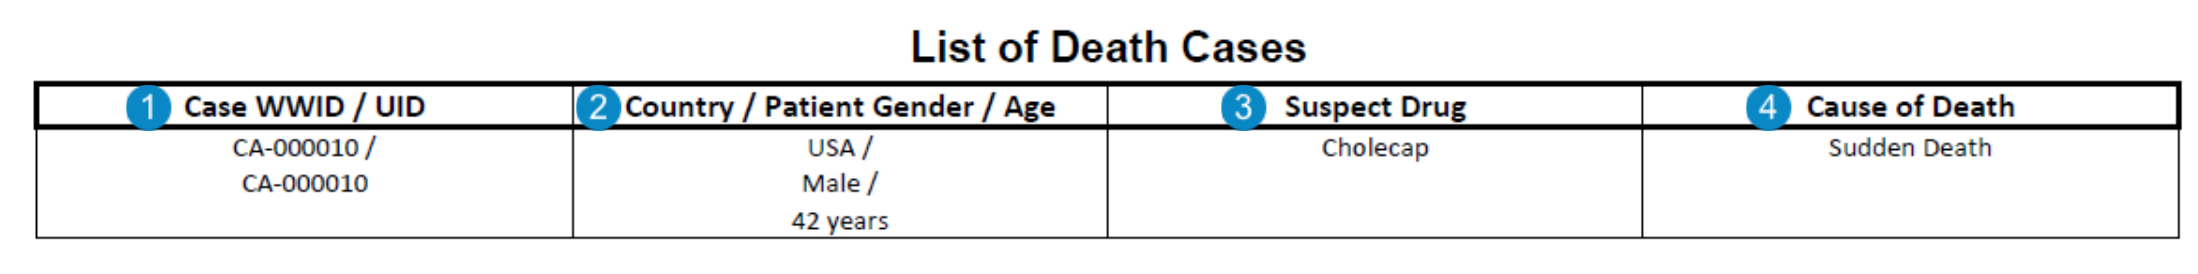 PADER List of Death Cases